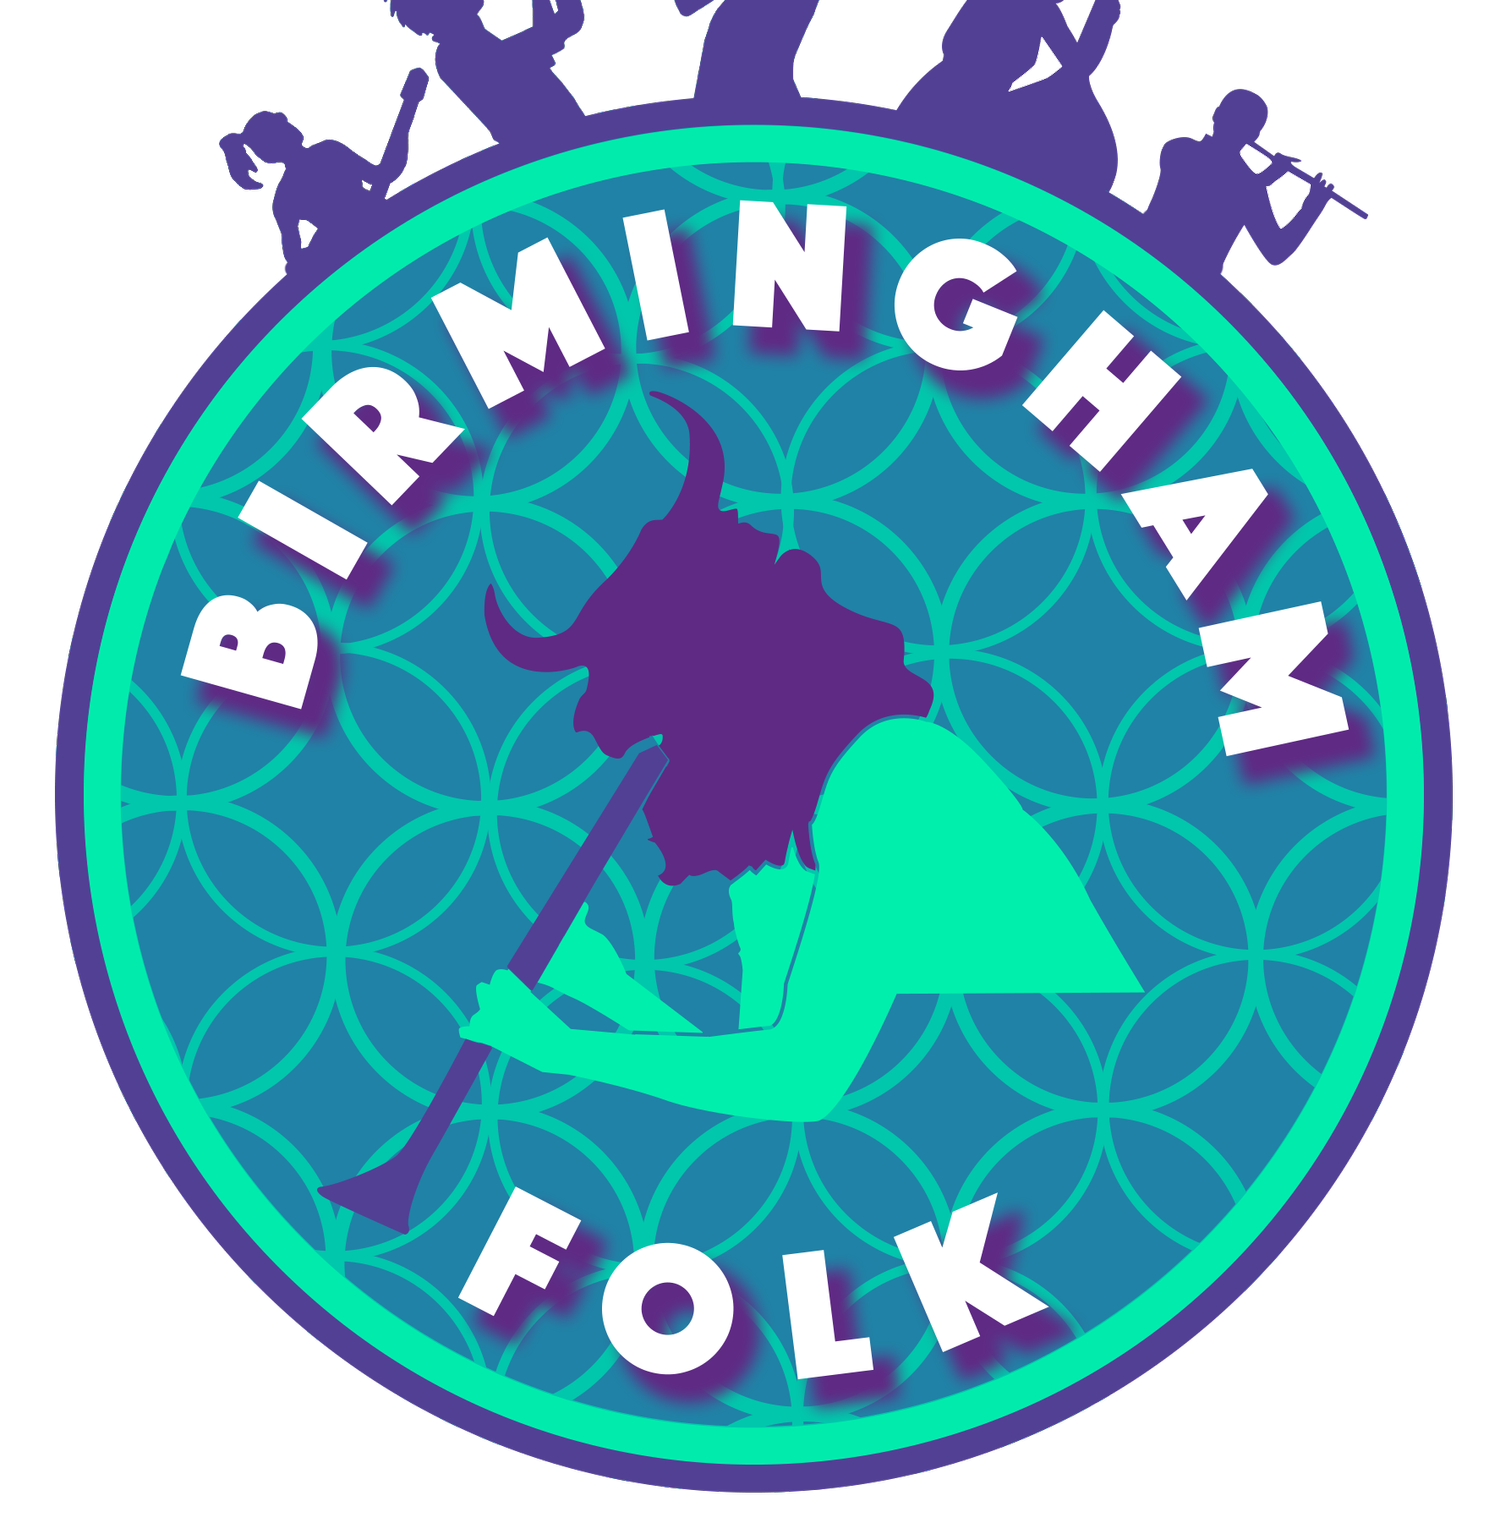 Birmingham Folk